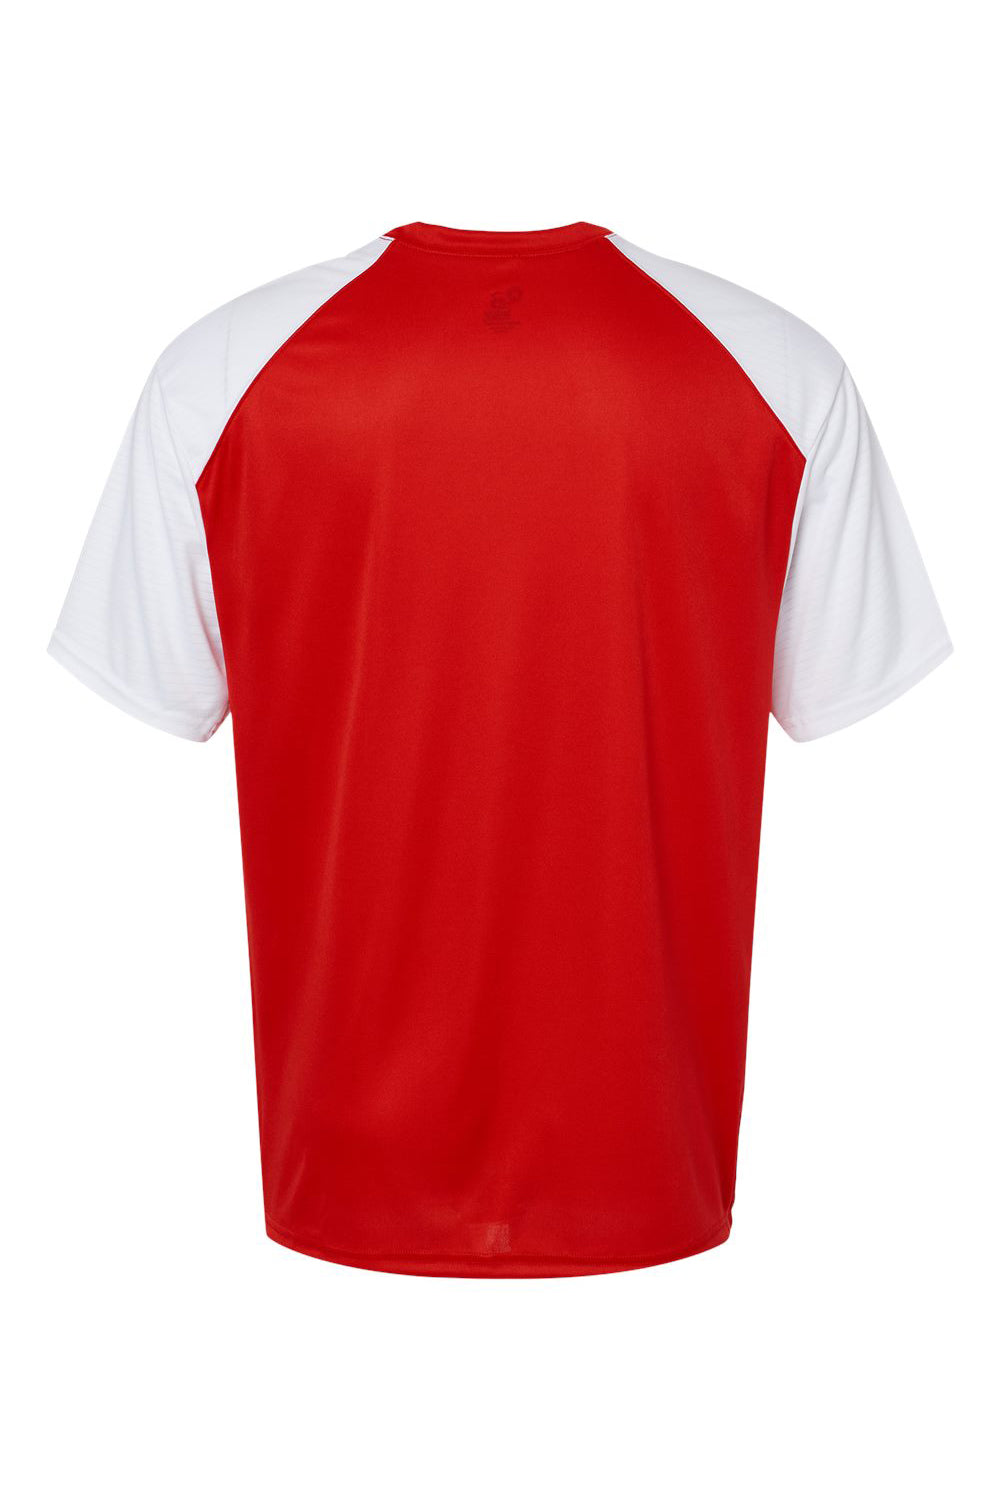 Badger 4230 Mens Breakout Moisture Wicking Short Sleeve Crewneck T-Shirt Red/White Flat Back